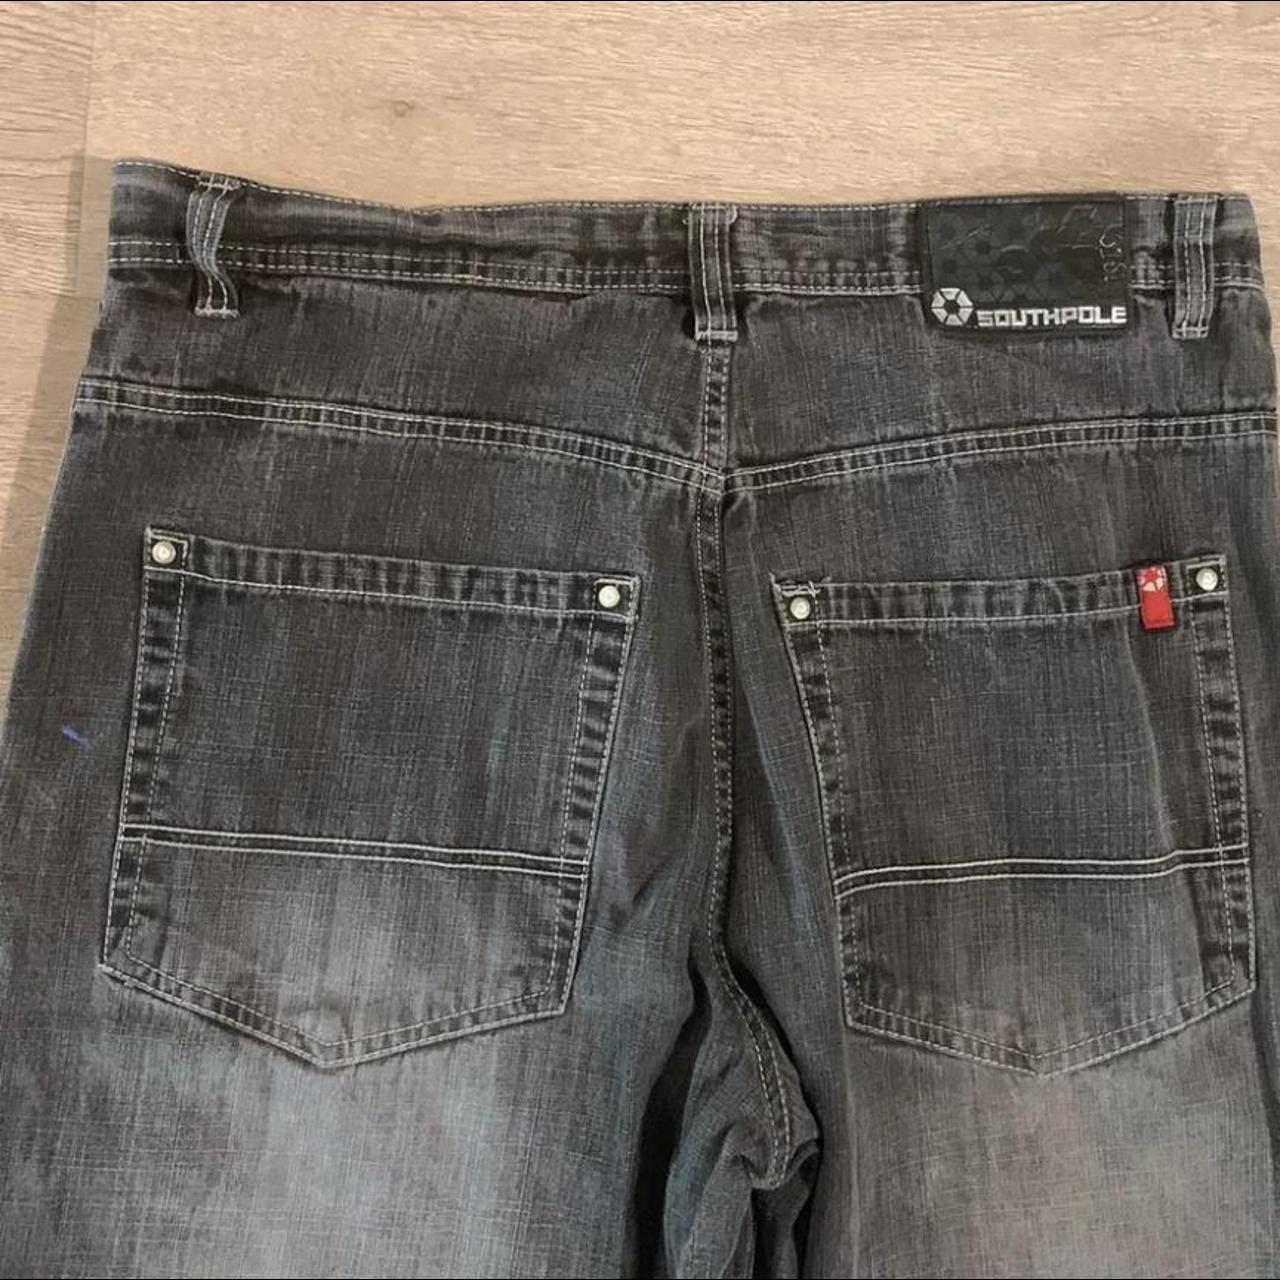 Black Southpole baggy jeans size 38 Small Paint... - Depop